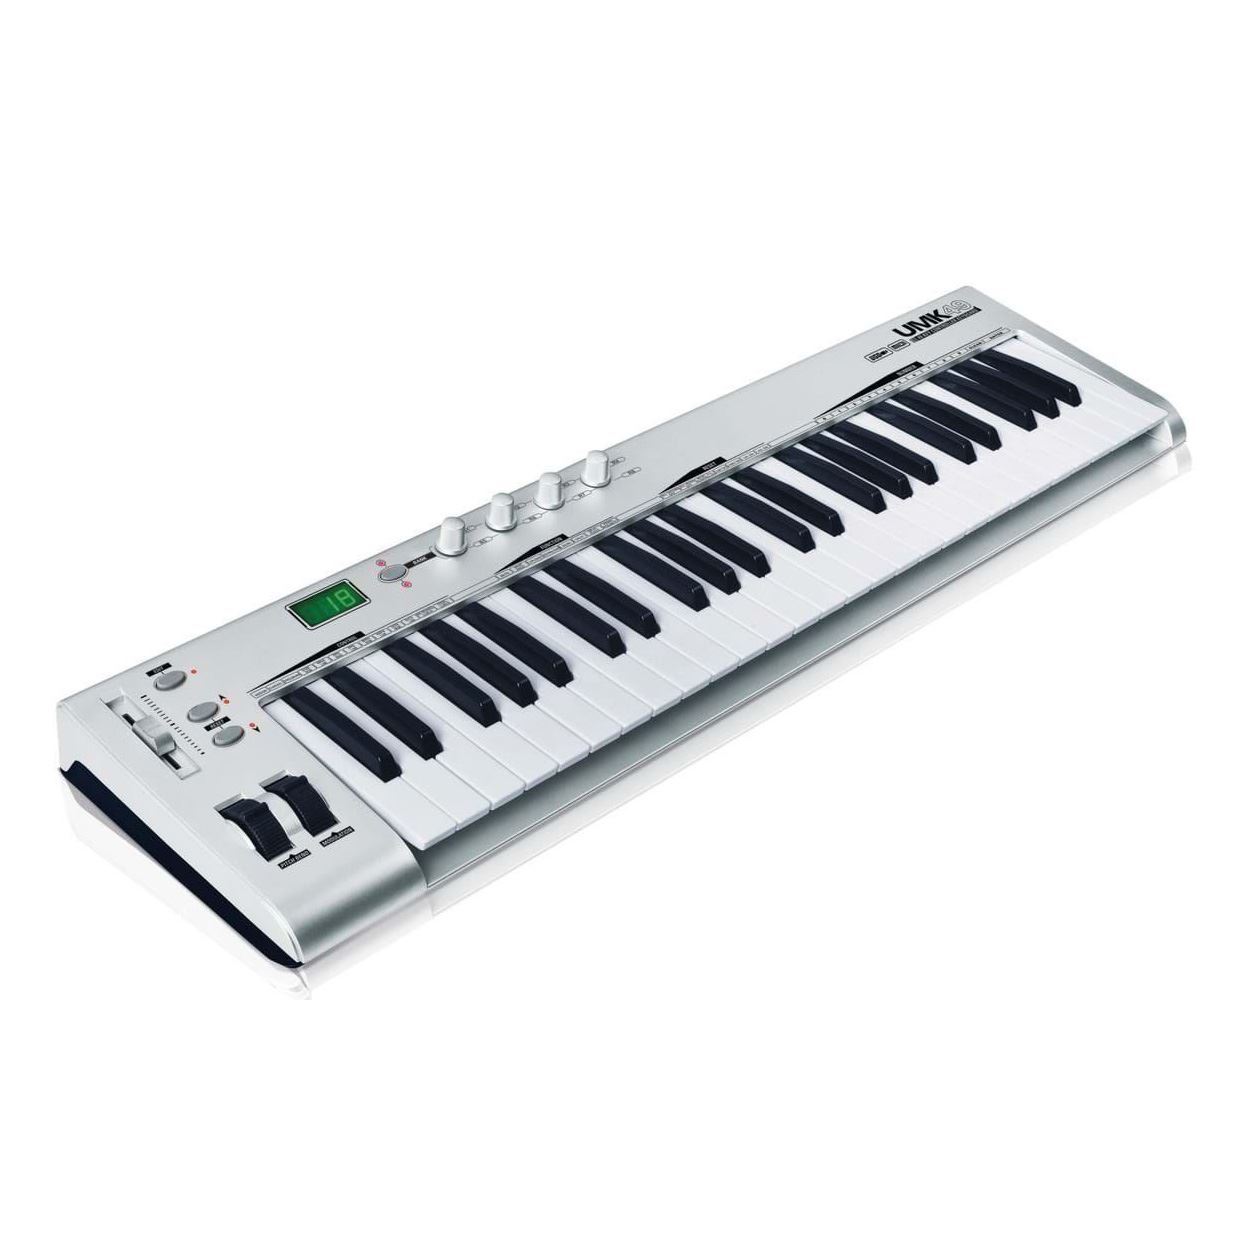 Ashton Umk 49 Usb Midi Controller Keyboard 49 Keys Perth